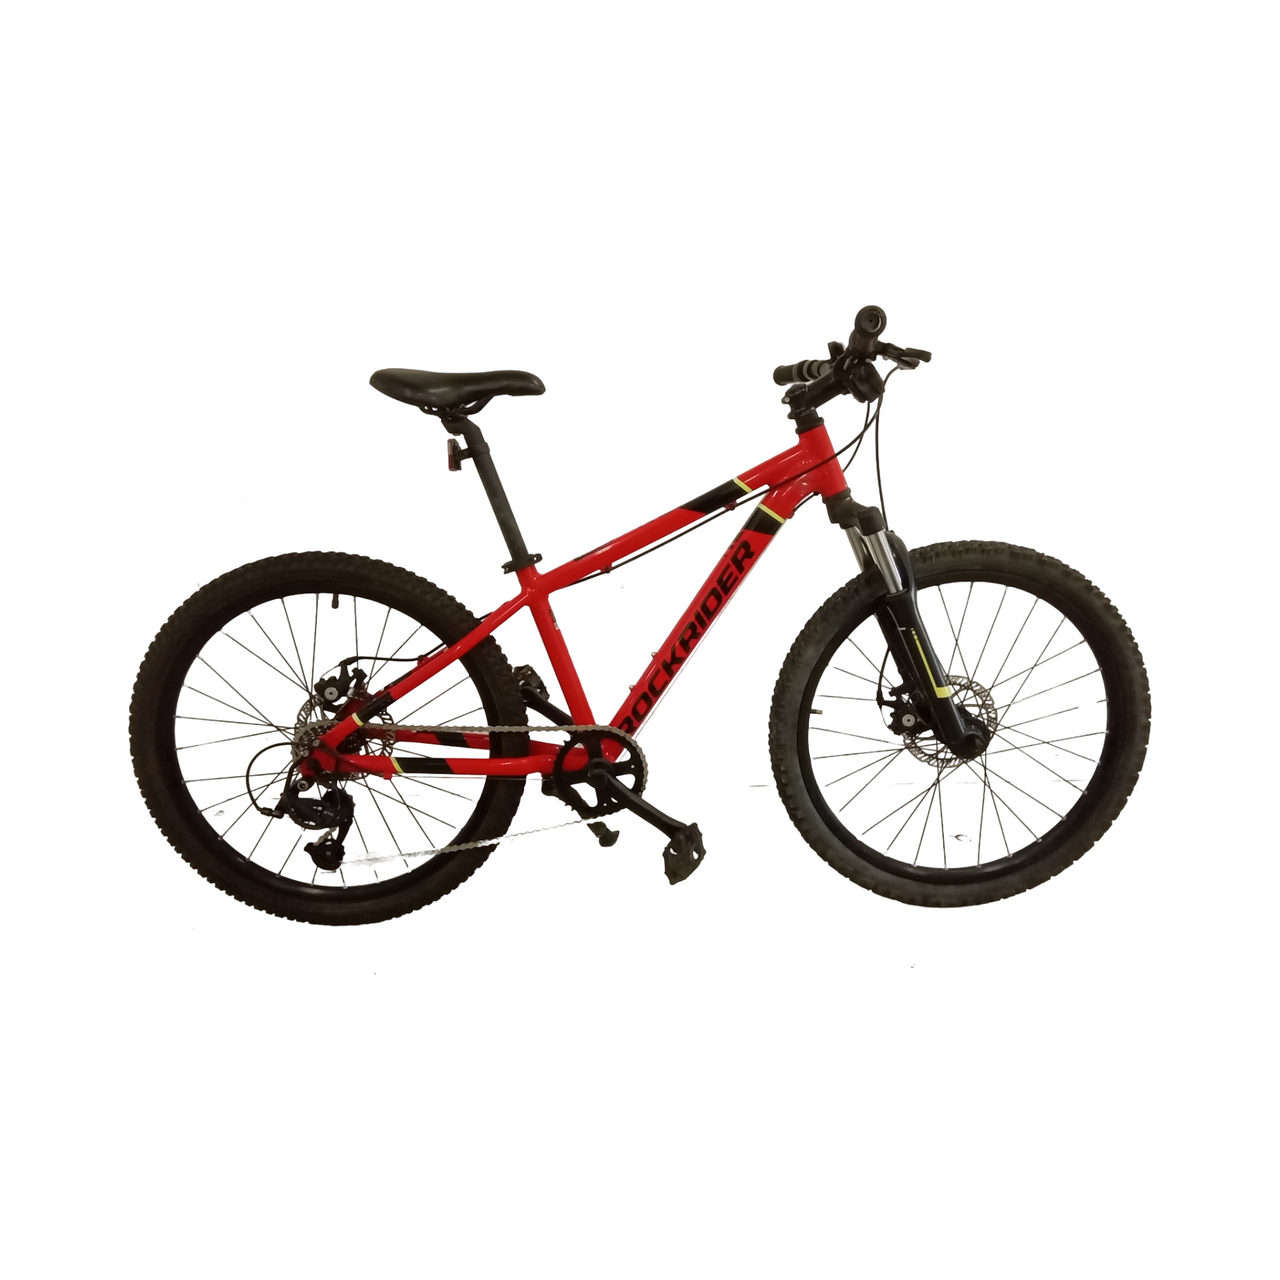 1538 - 24" Red, Mountain Bike,
Kids, Bike